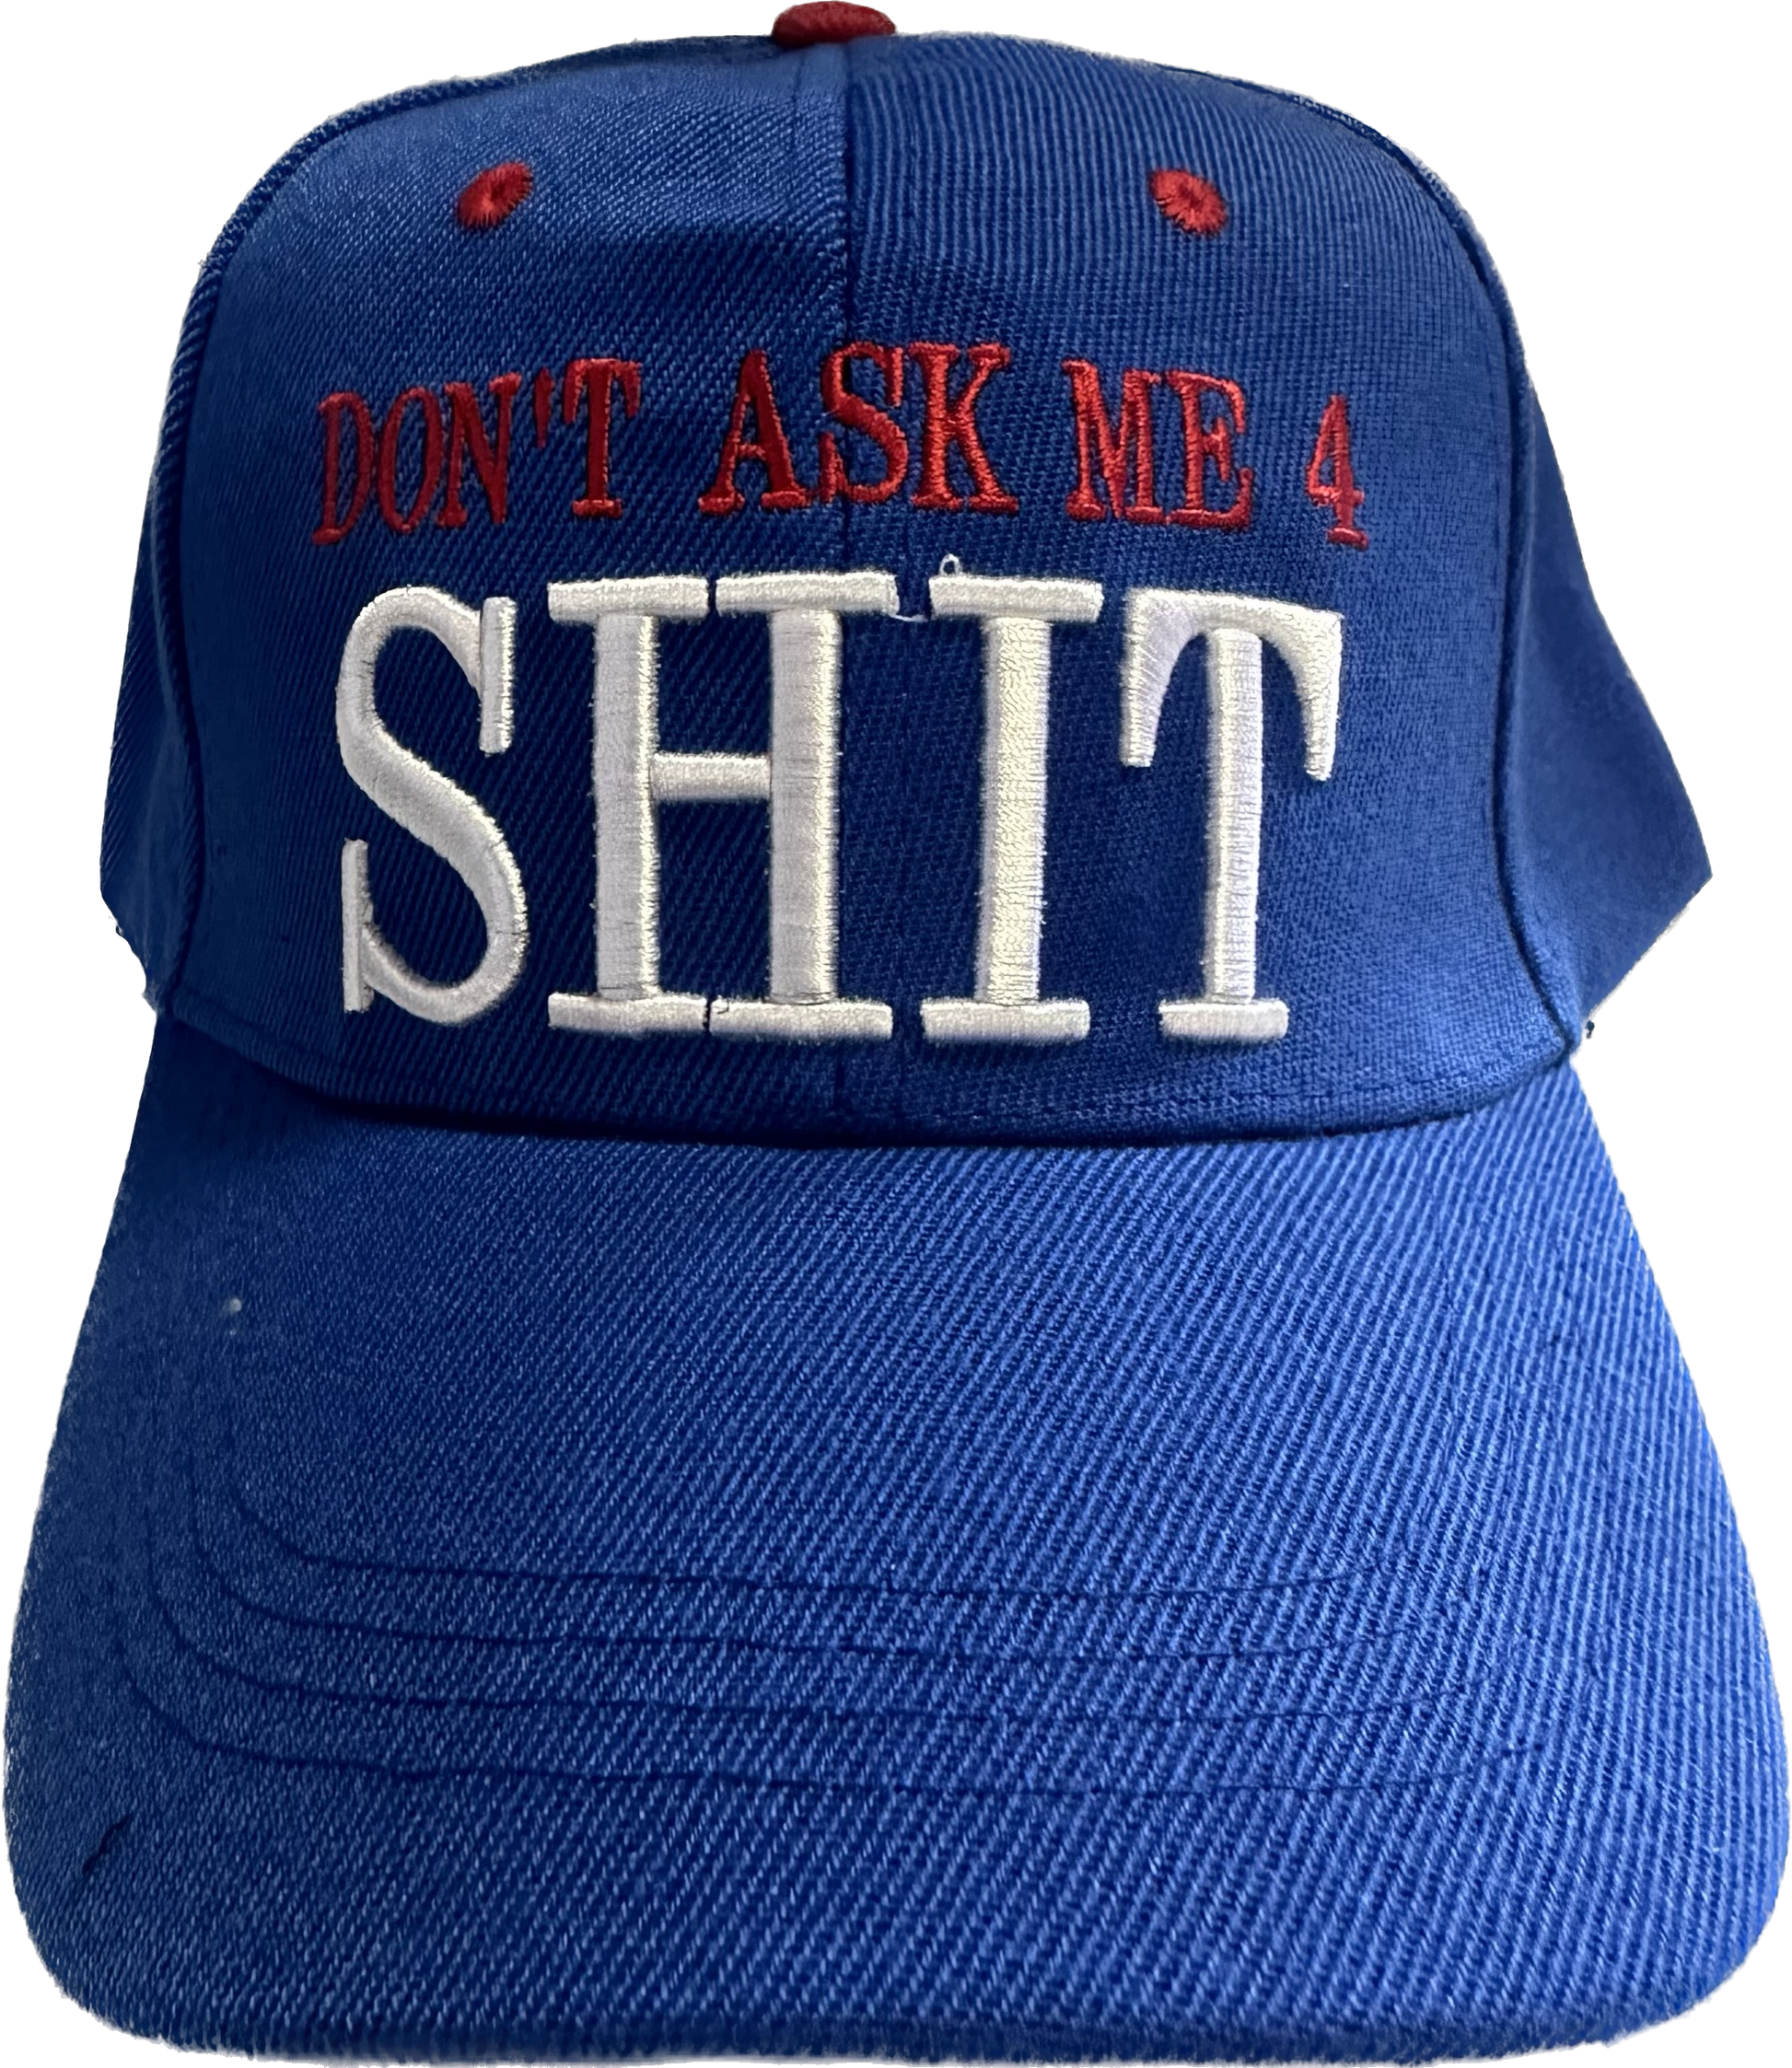 Blue Dont Ask Me 4 Shit Hat